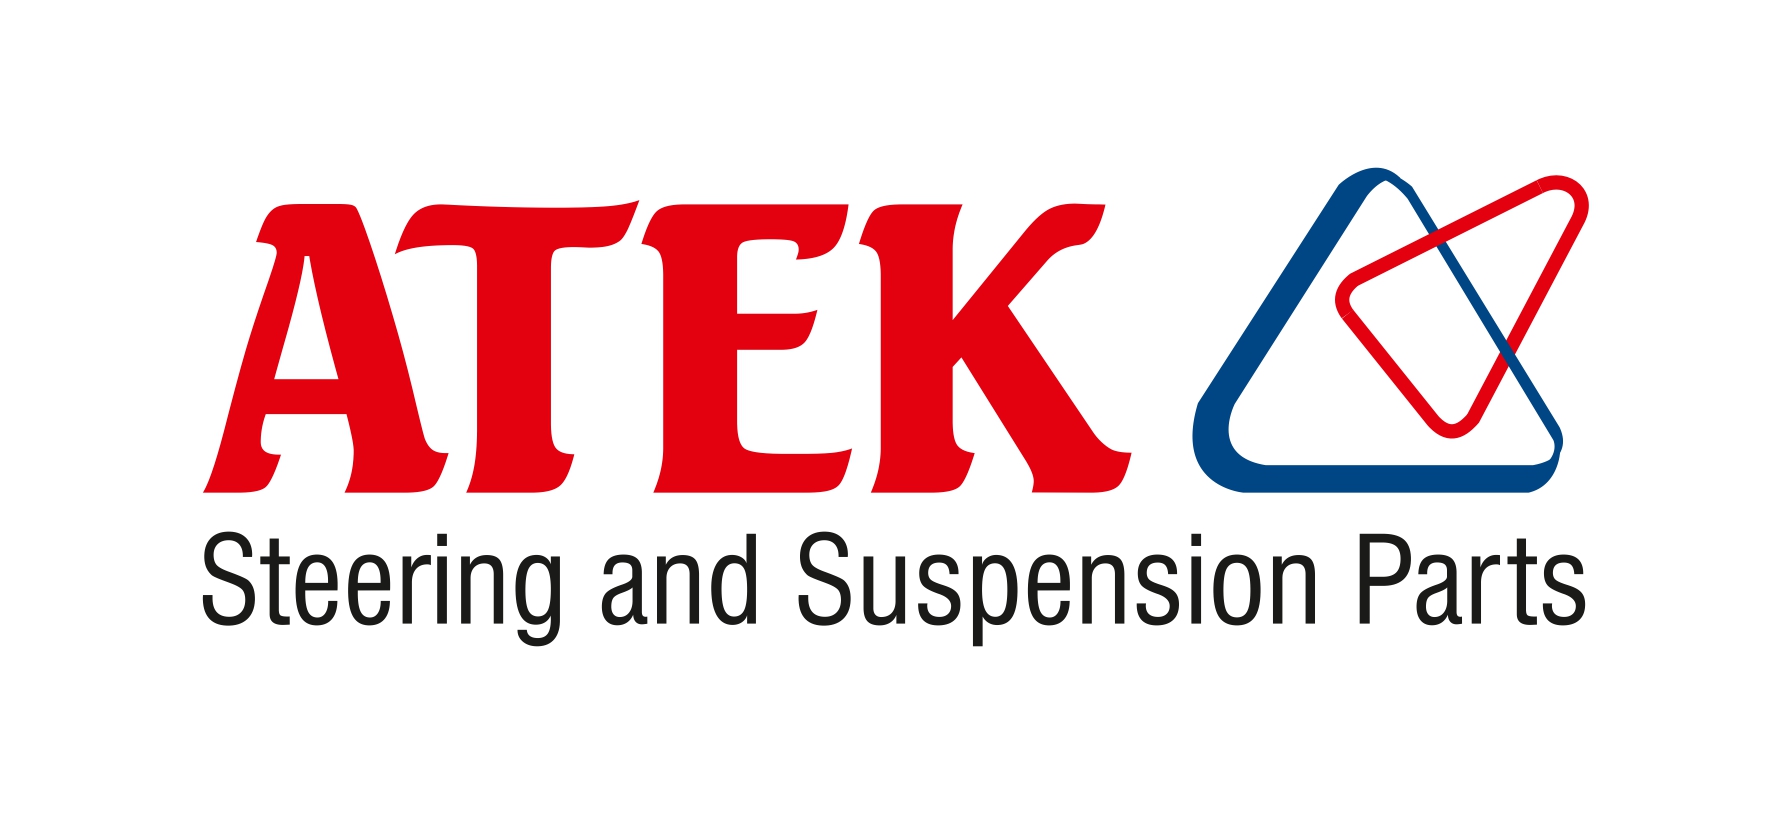 Atek Steering and Suspension Parts logo_page-0001